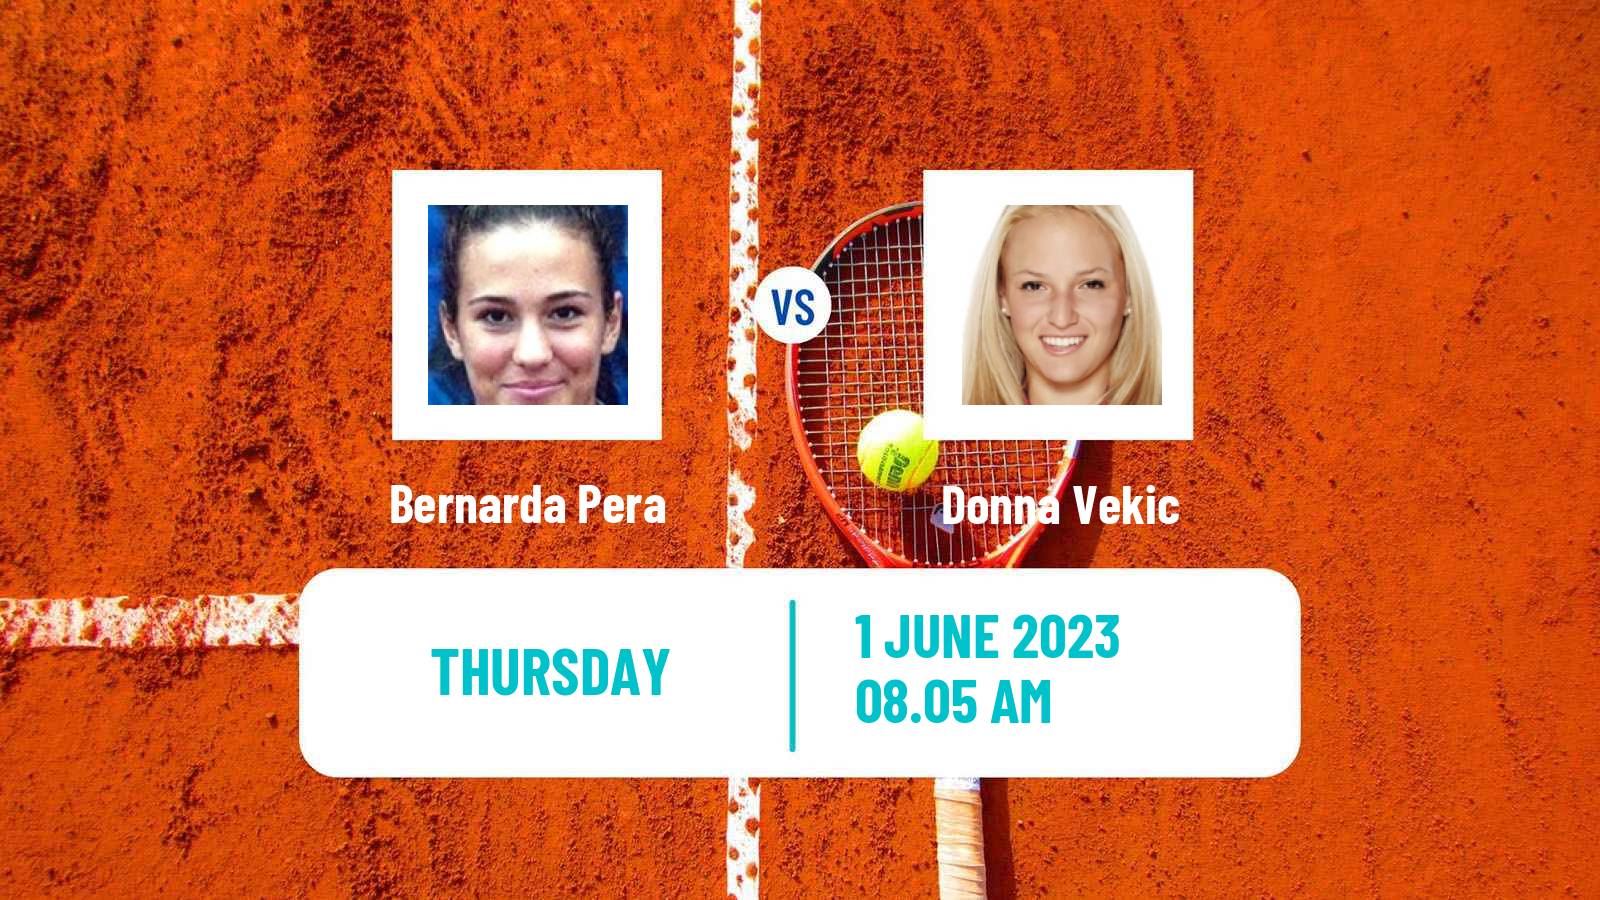 Tennis WTA Roland Garros Bernarda Pera - Donna Vekic